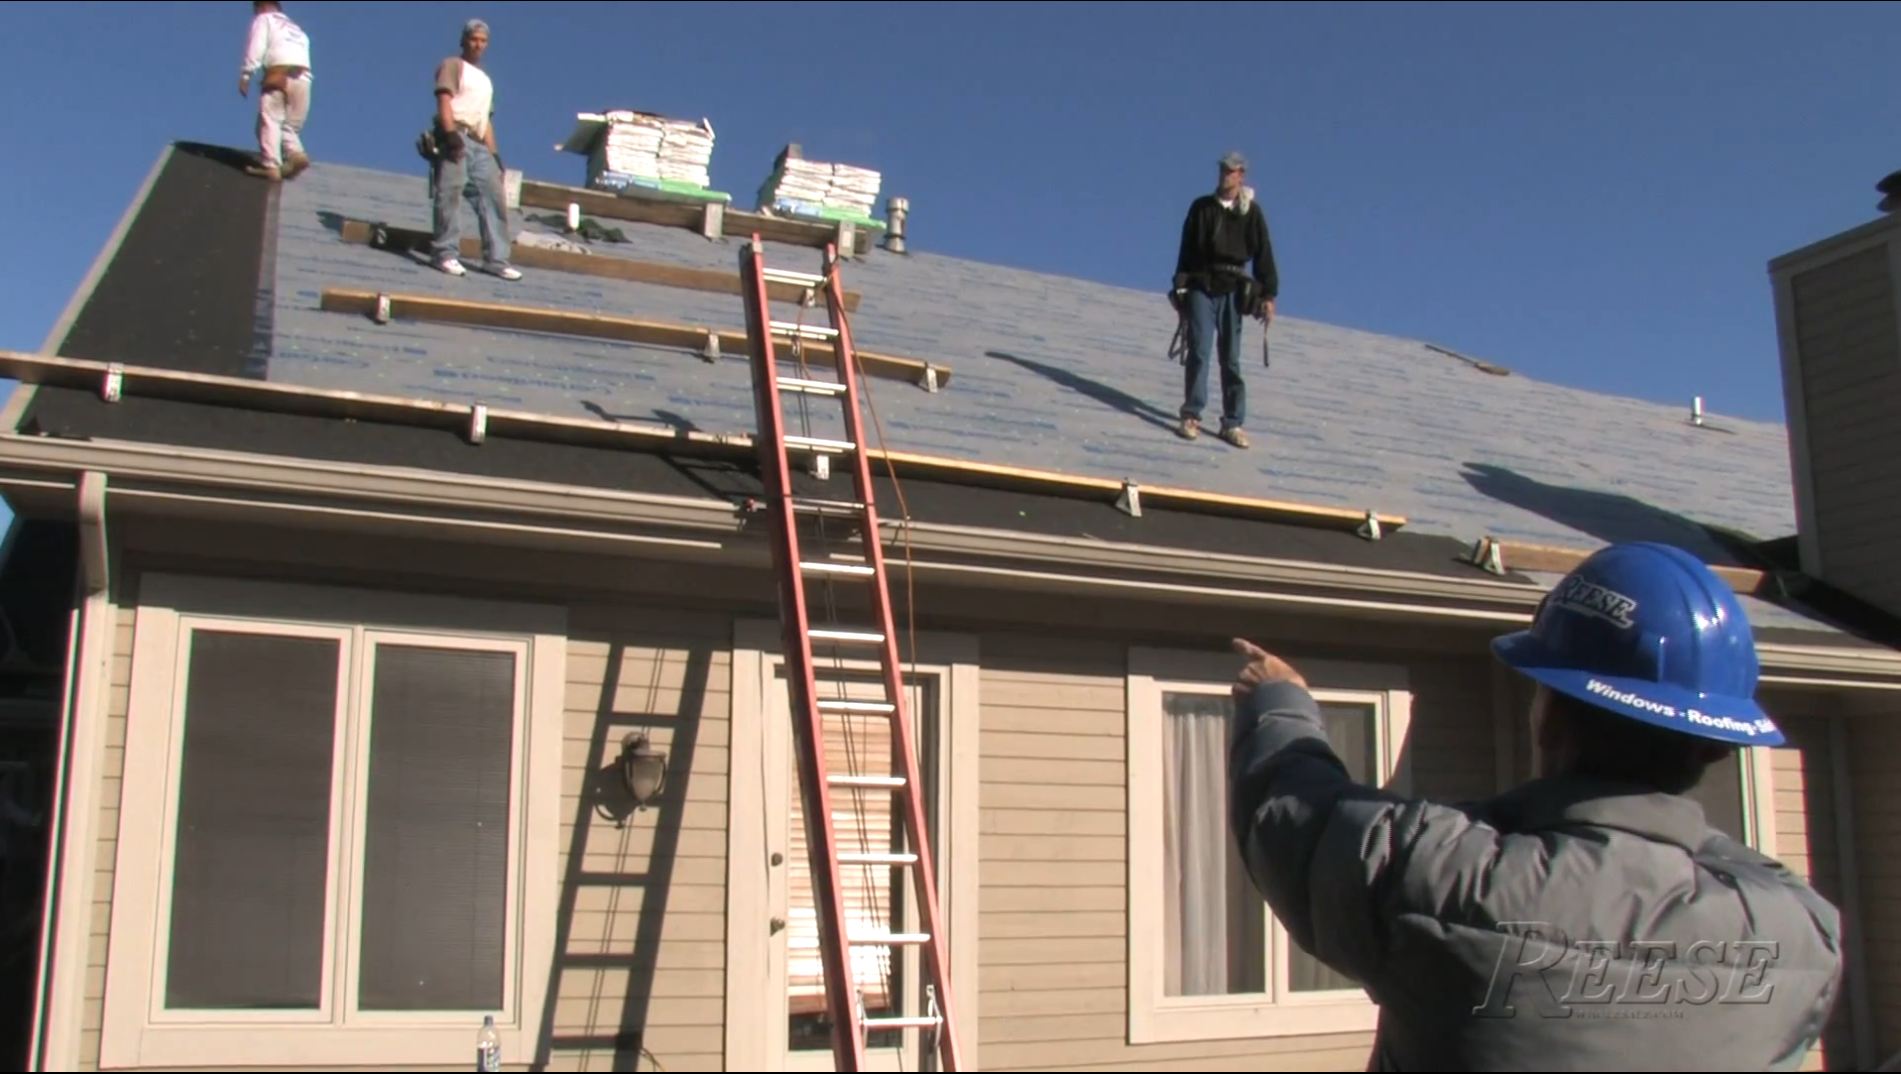 Rooftop Safety Hazards  Alpha Roofing Industries, LLC